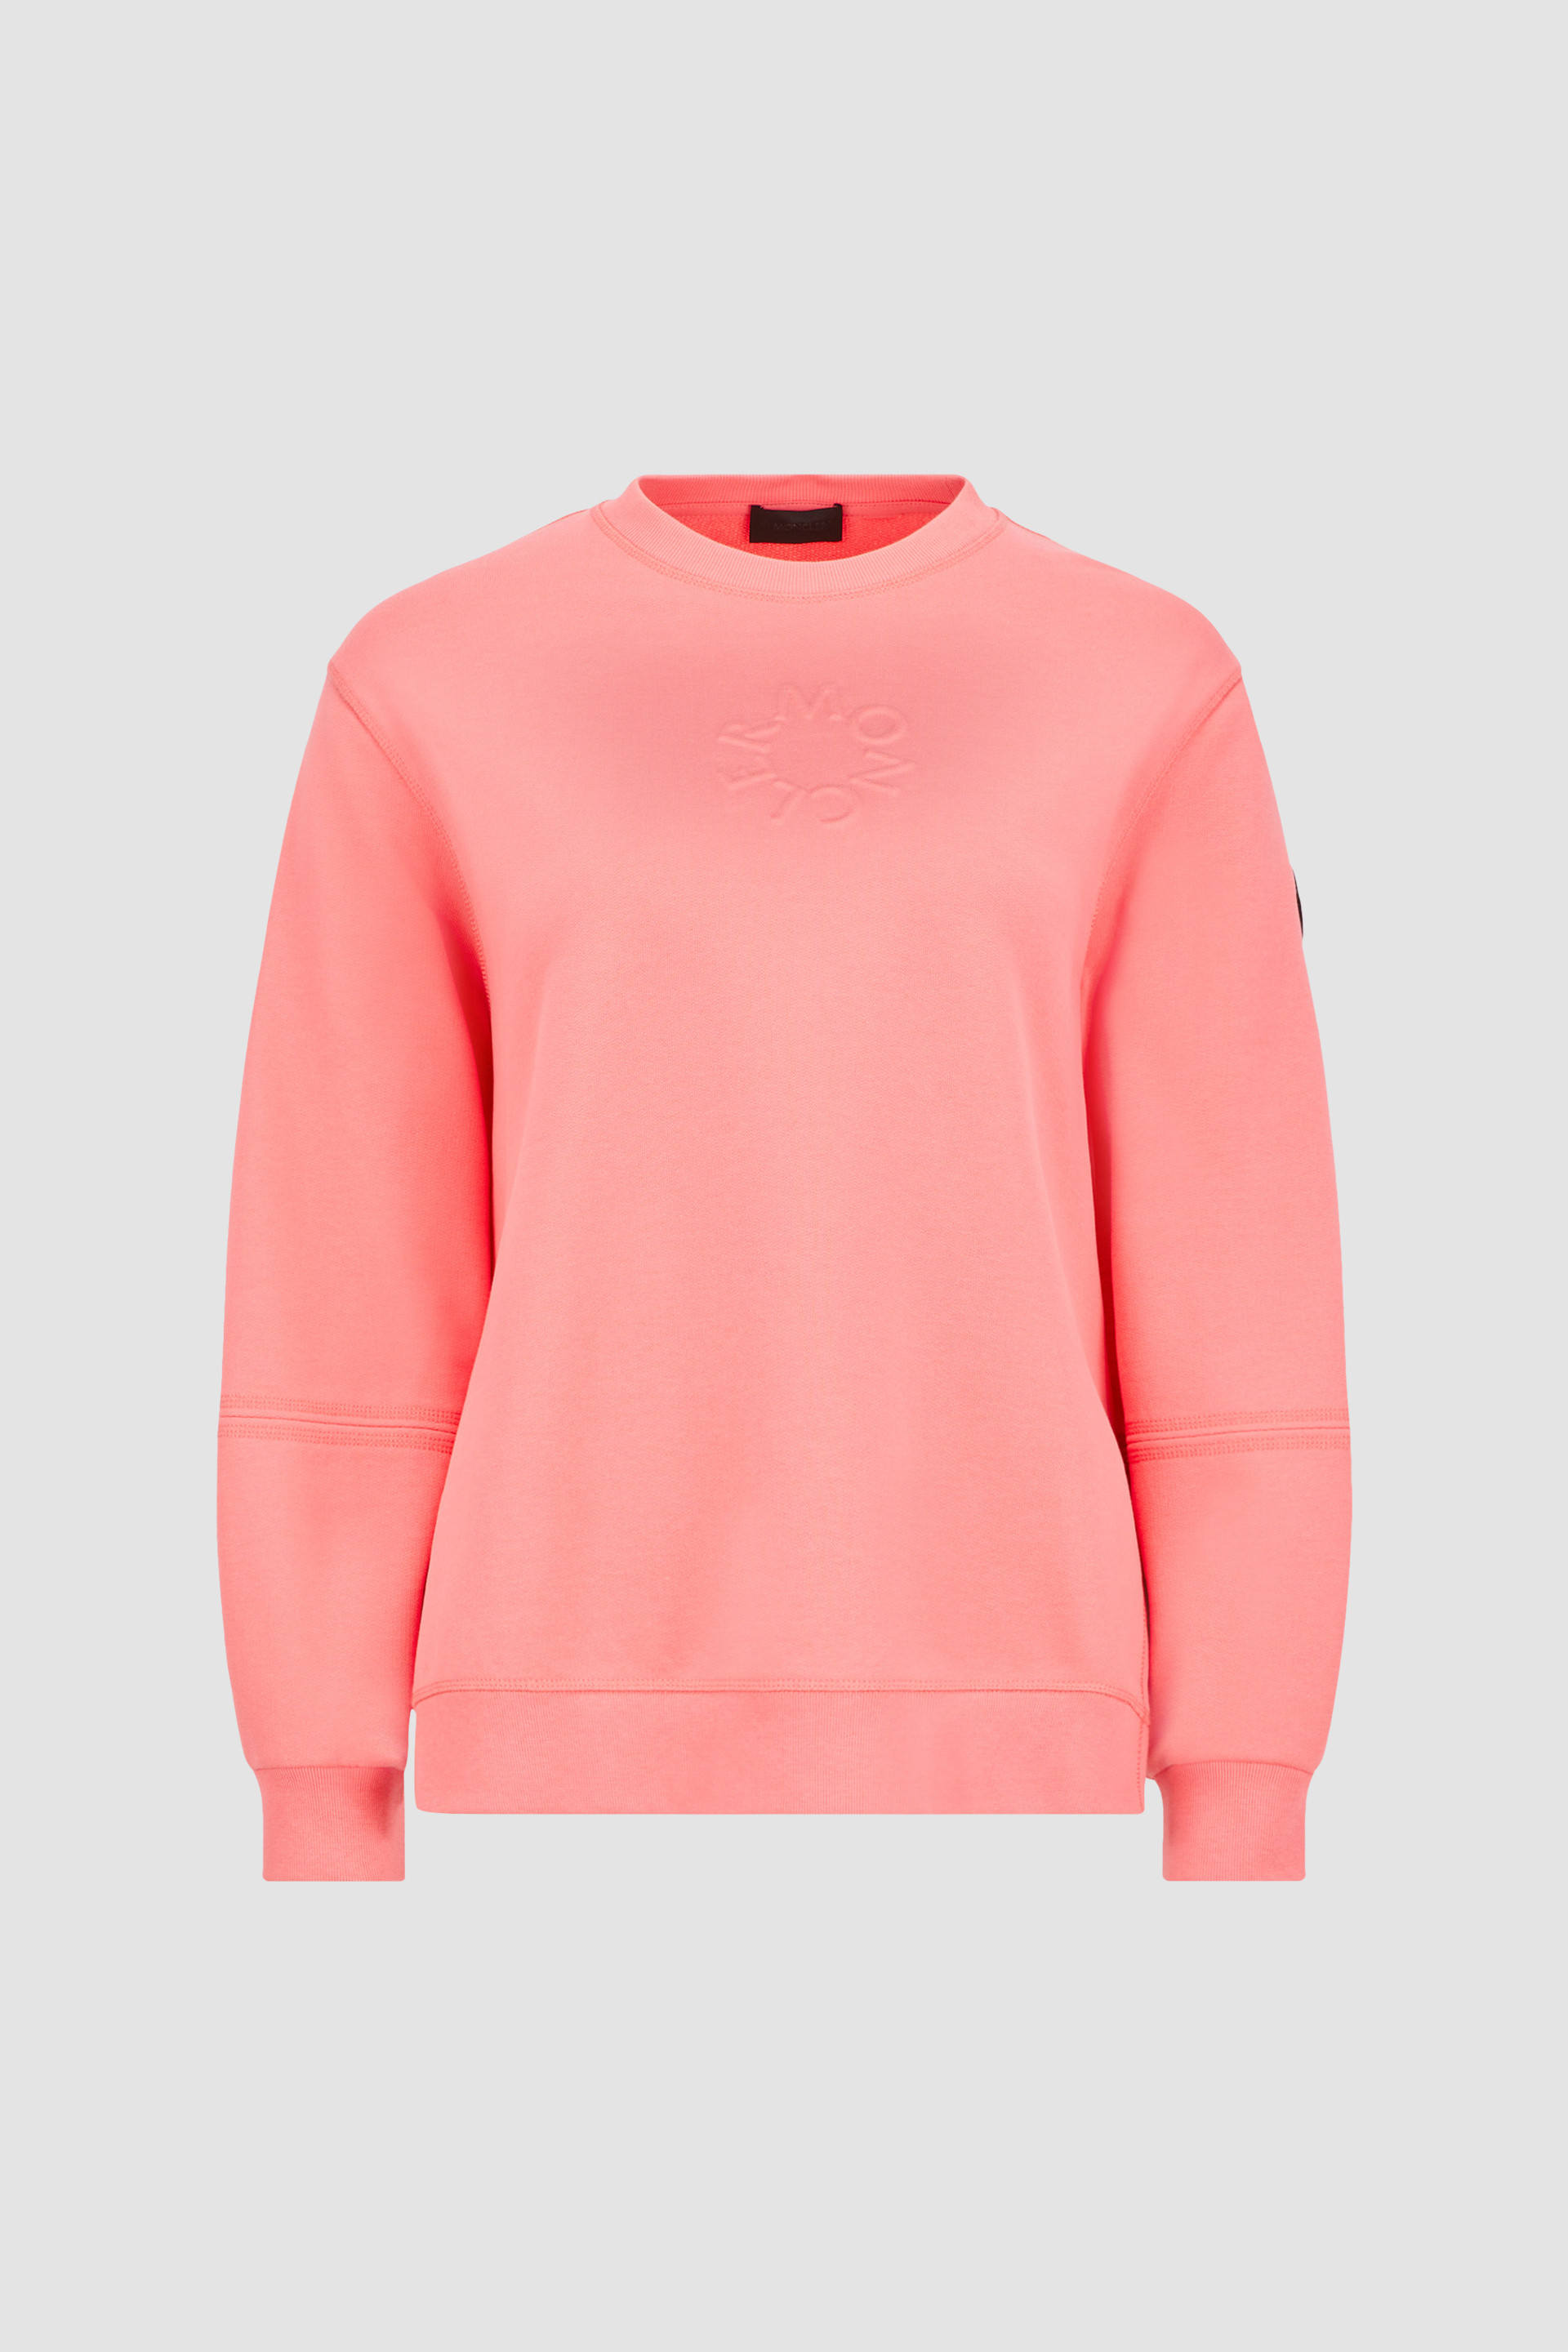 Shop MONCLER 2021-22FW Size M ◇ MONCLER Sweatshirt Hoodie Pink Women's  (093-8G00007-899FL, HOODIE) by micce